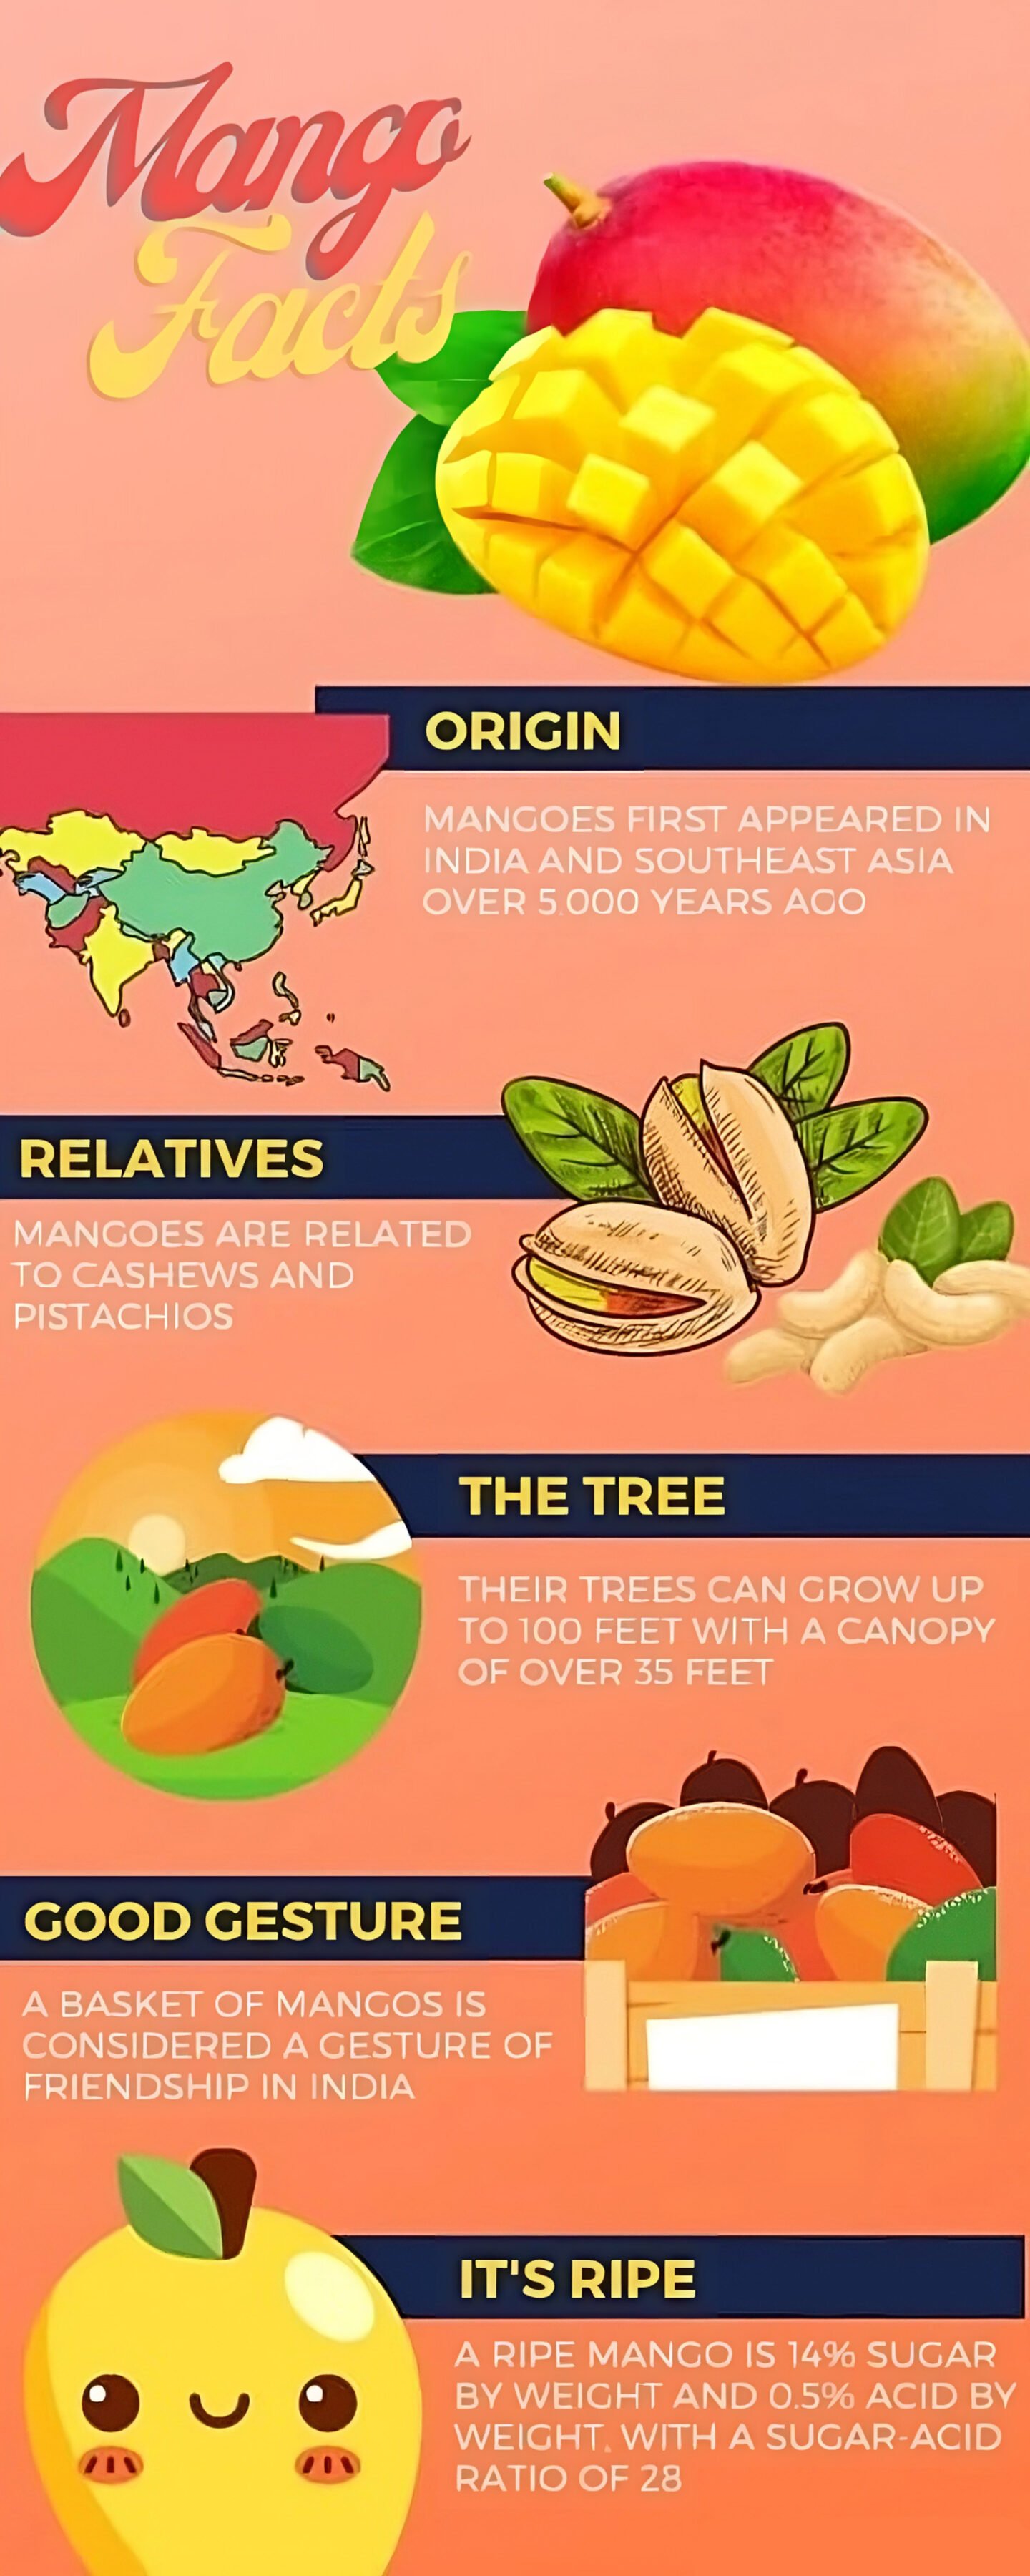 mango facts infographic